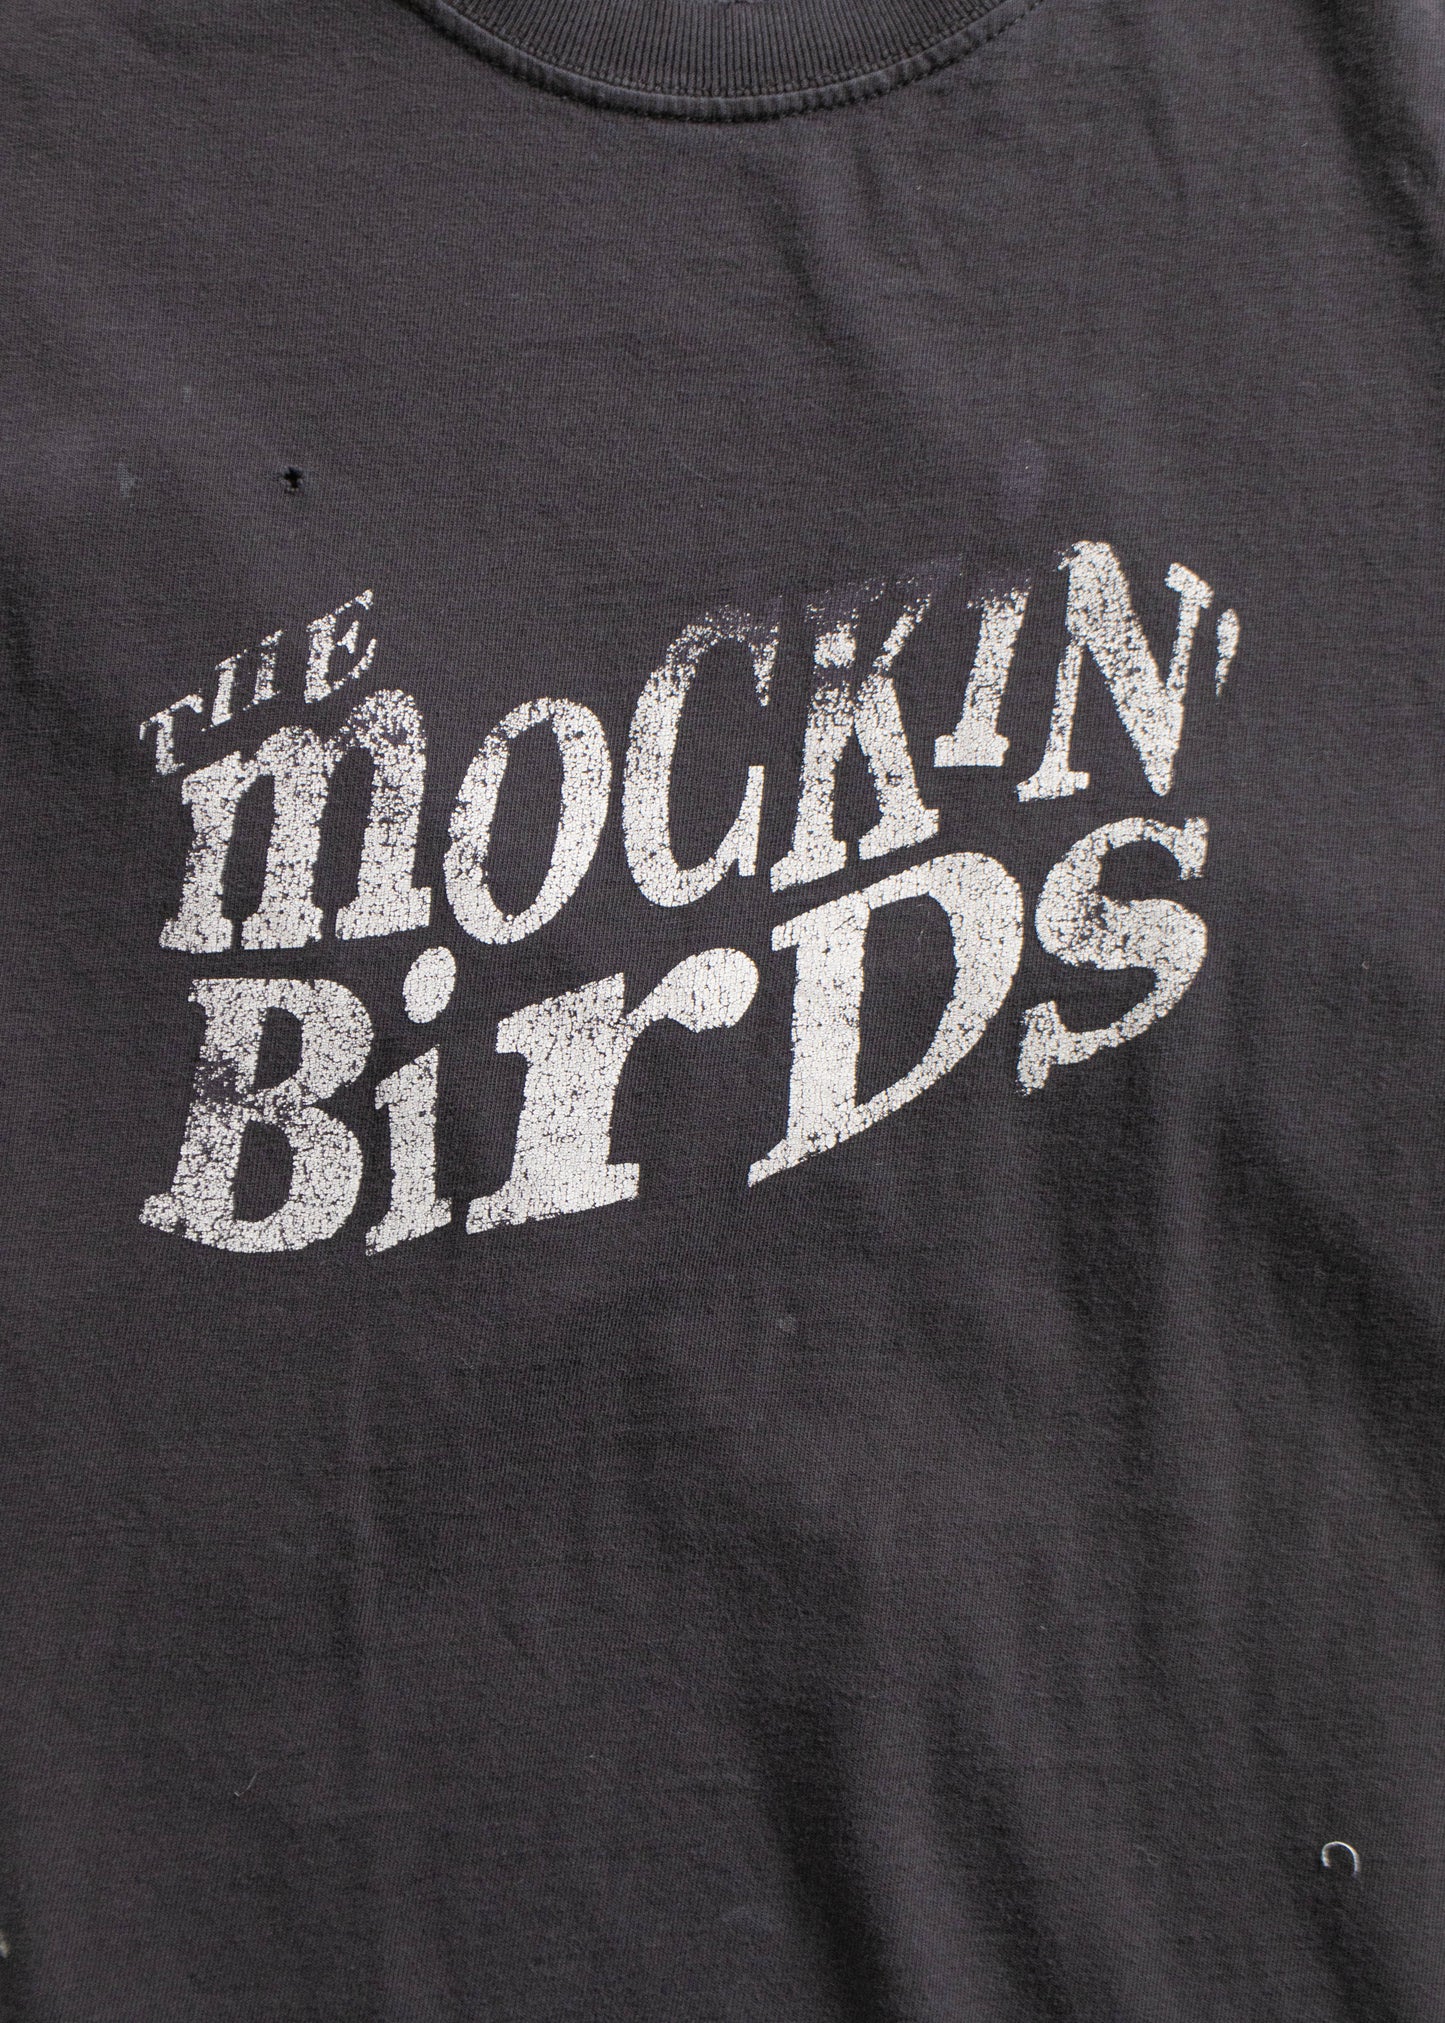 The Mockin Birds T-Shirt Size S/M